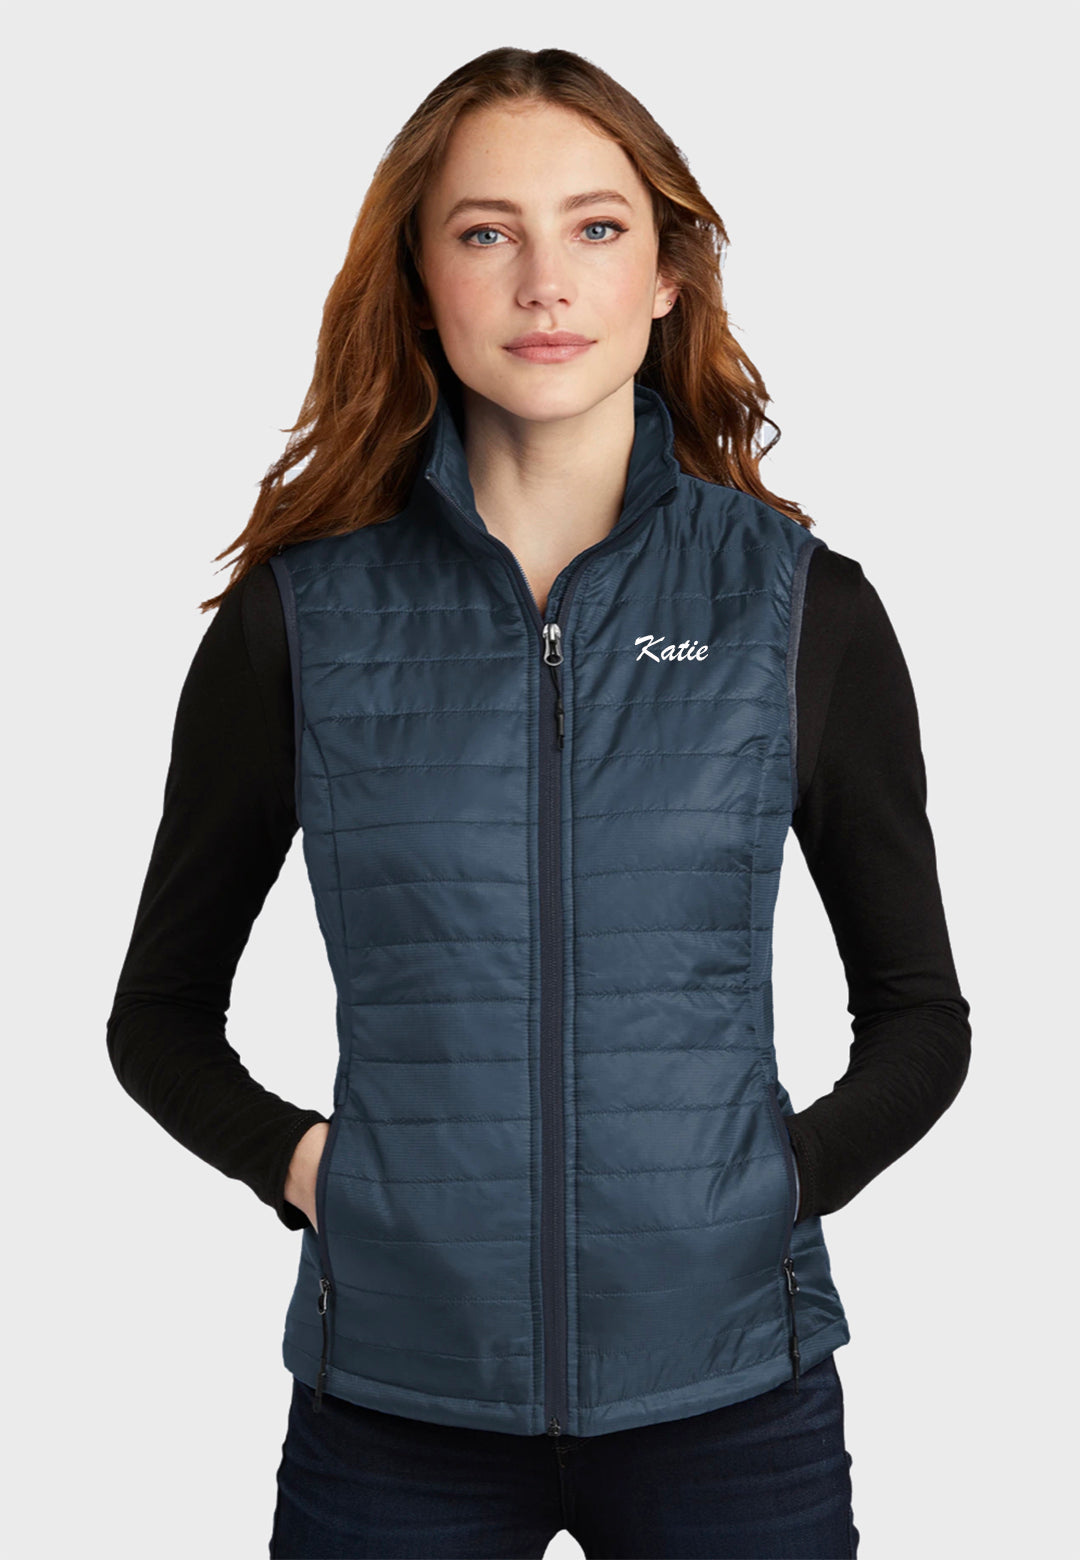 Kris Di Carlo Equestrian Port Authority® Packable Puffy Vest - Ladies + Mens Styles, Multiple Color Options